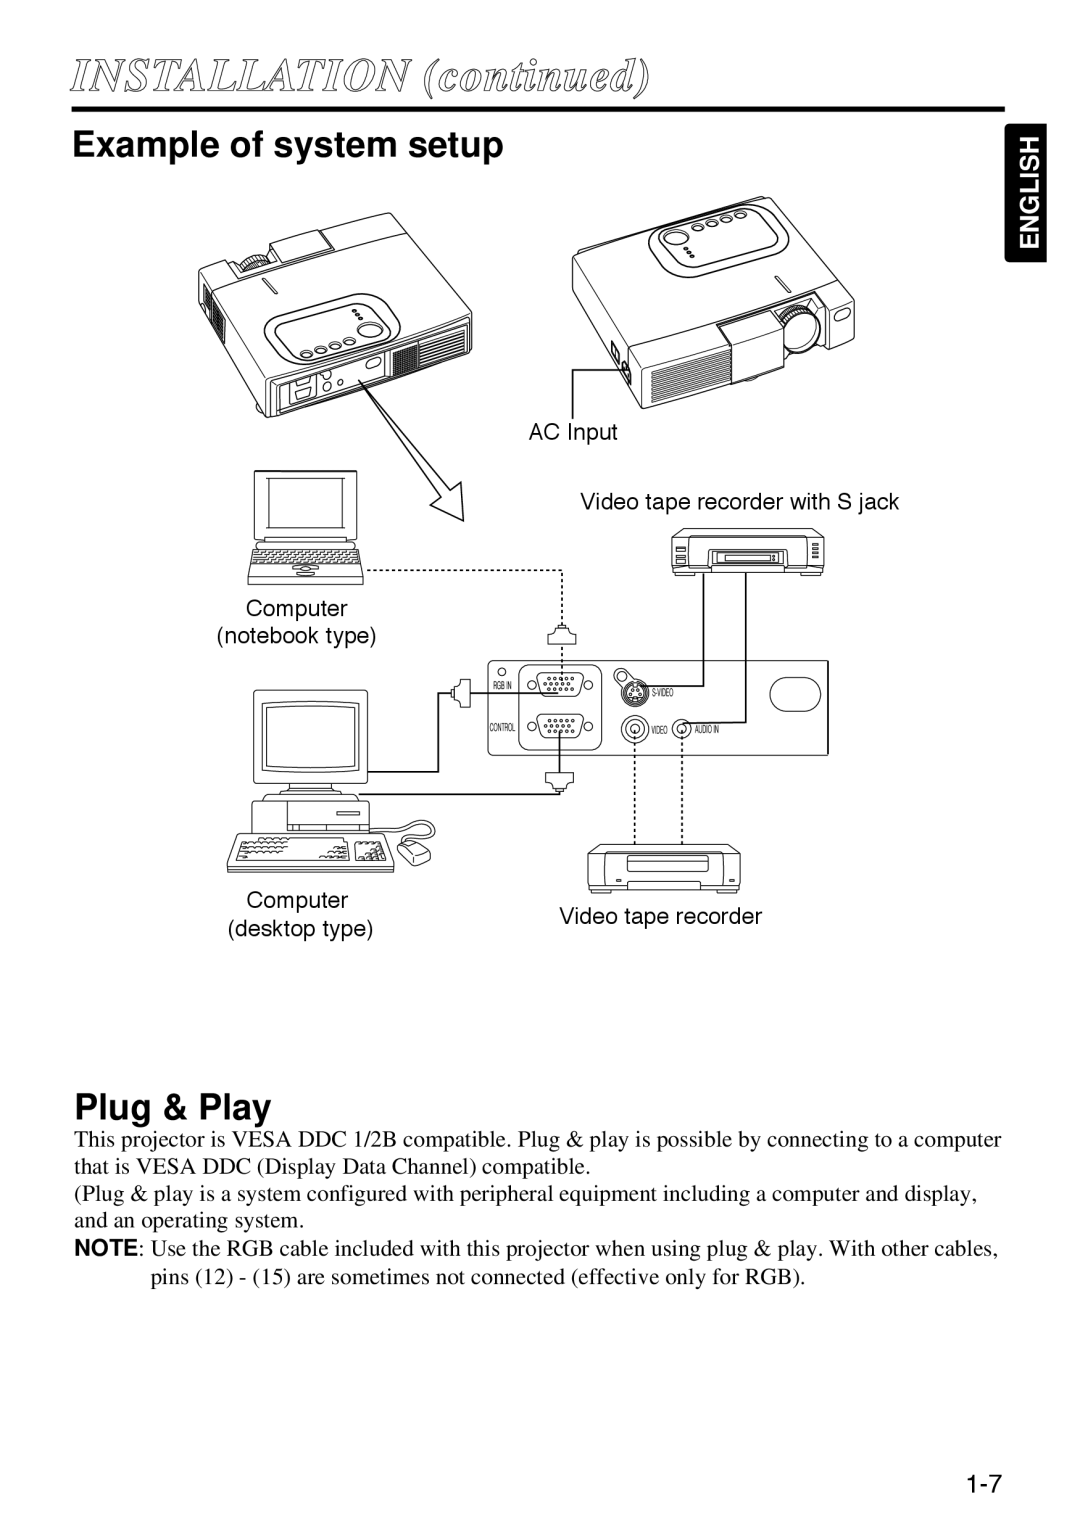 Polaroid SVGA 270 manual Example of system setup, Plug & Play, INSTALLATION continued, English, Computer, desktop type 